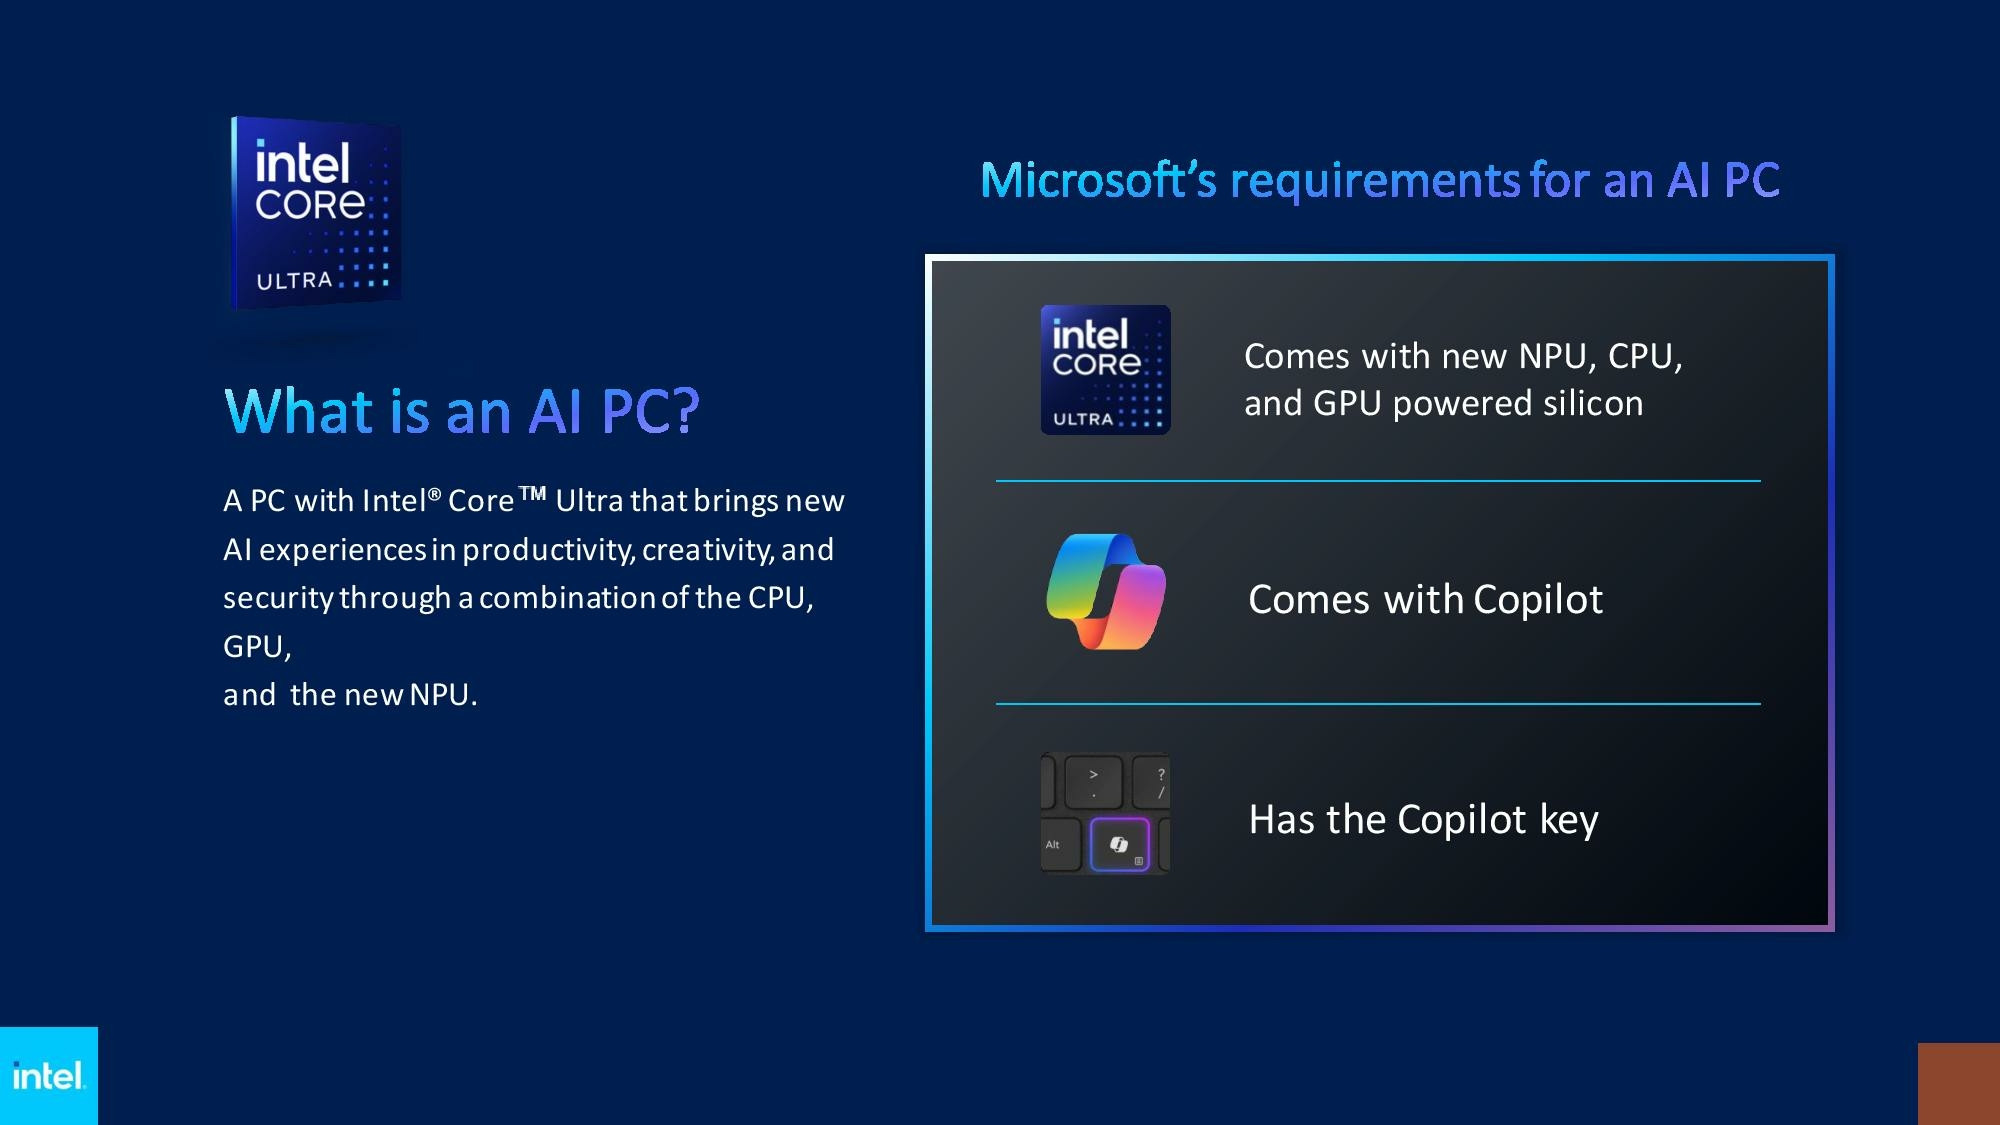 Intel Microsoft AI PC specifications